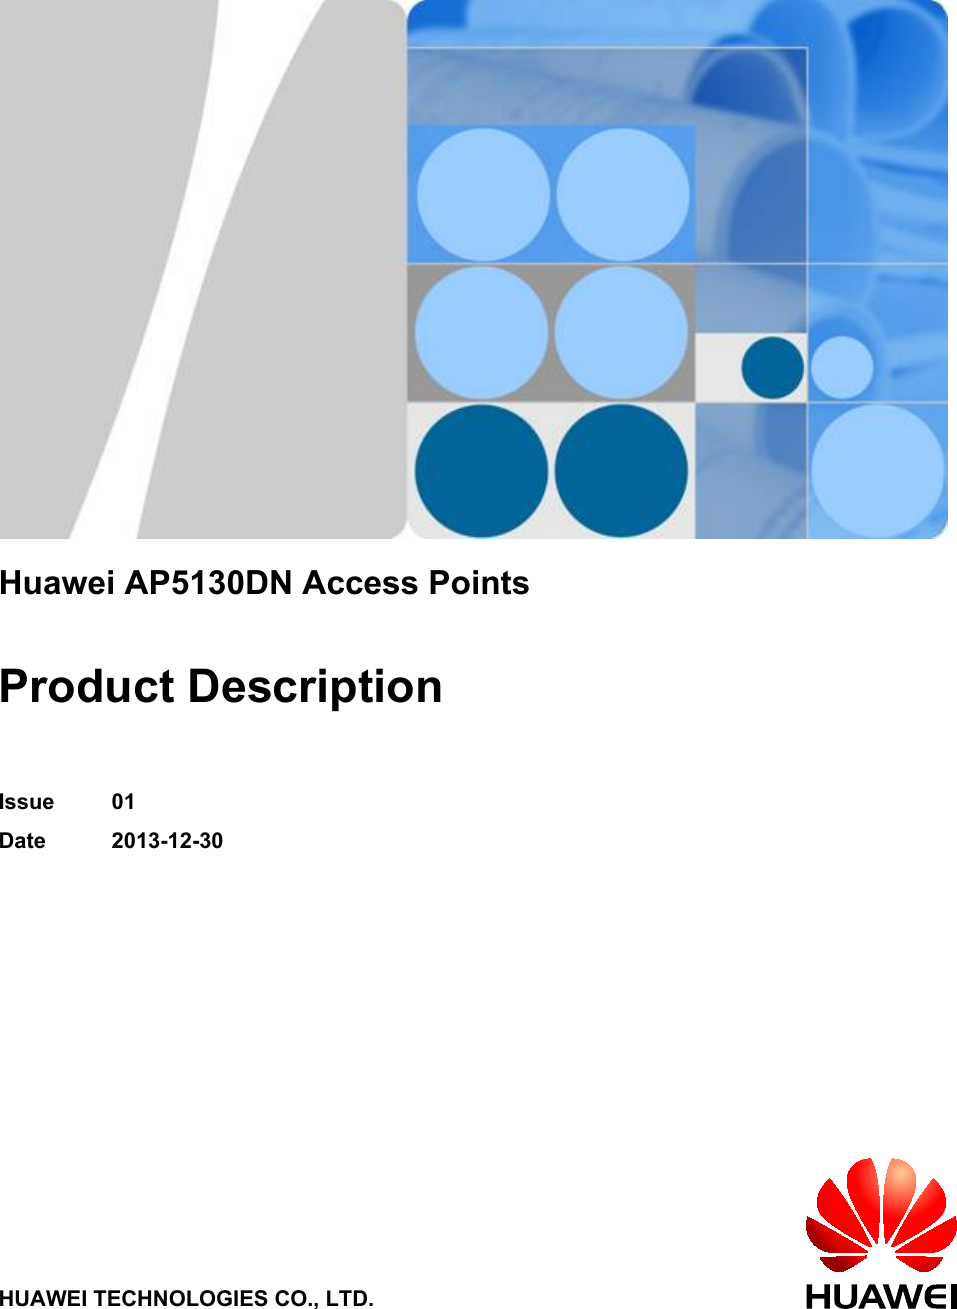 Huawei AP5130DN Access PointsProduct DescriptionIssue 01Date 2013-12-30HUAWEI TECHNOLOGIES CO., LTD.